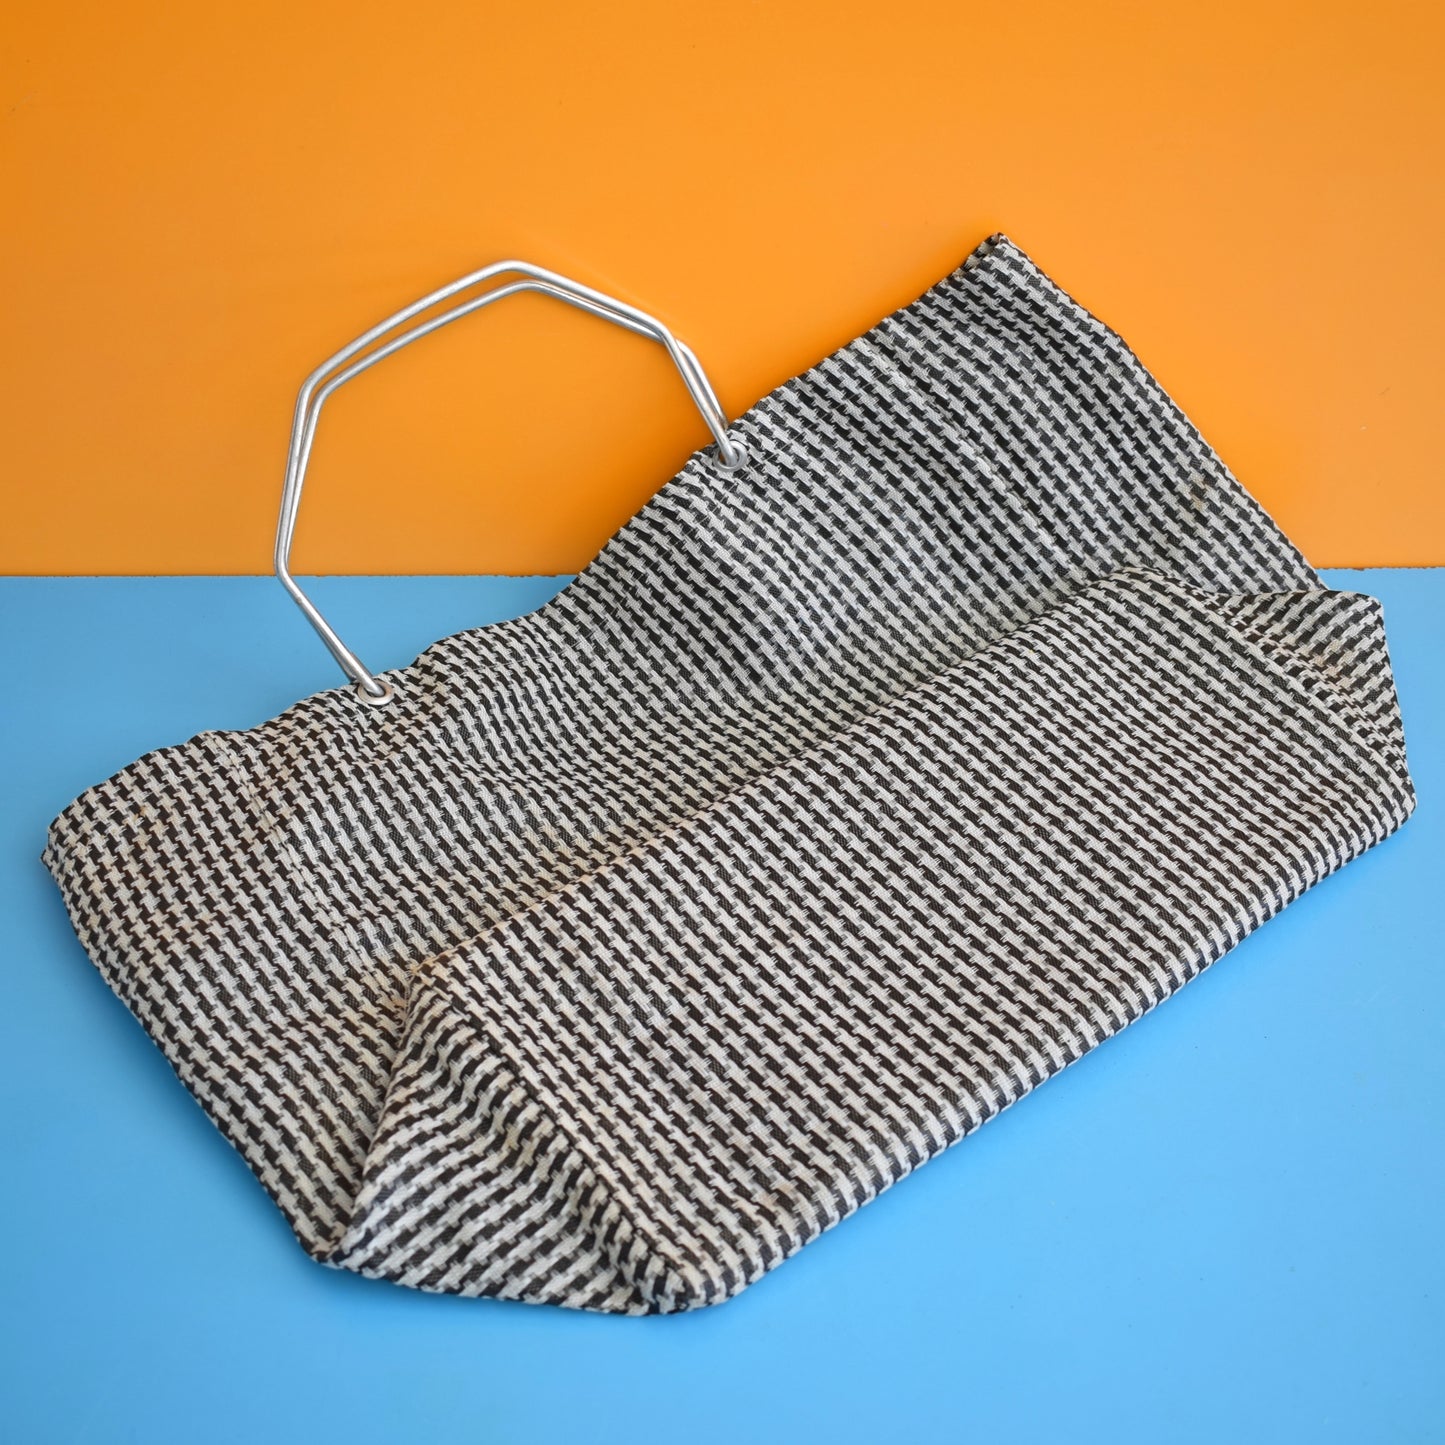 Vintage 1960s Woven Shopping Bag - Monochrome